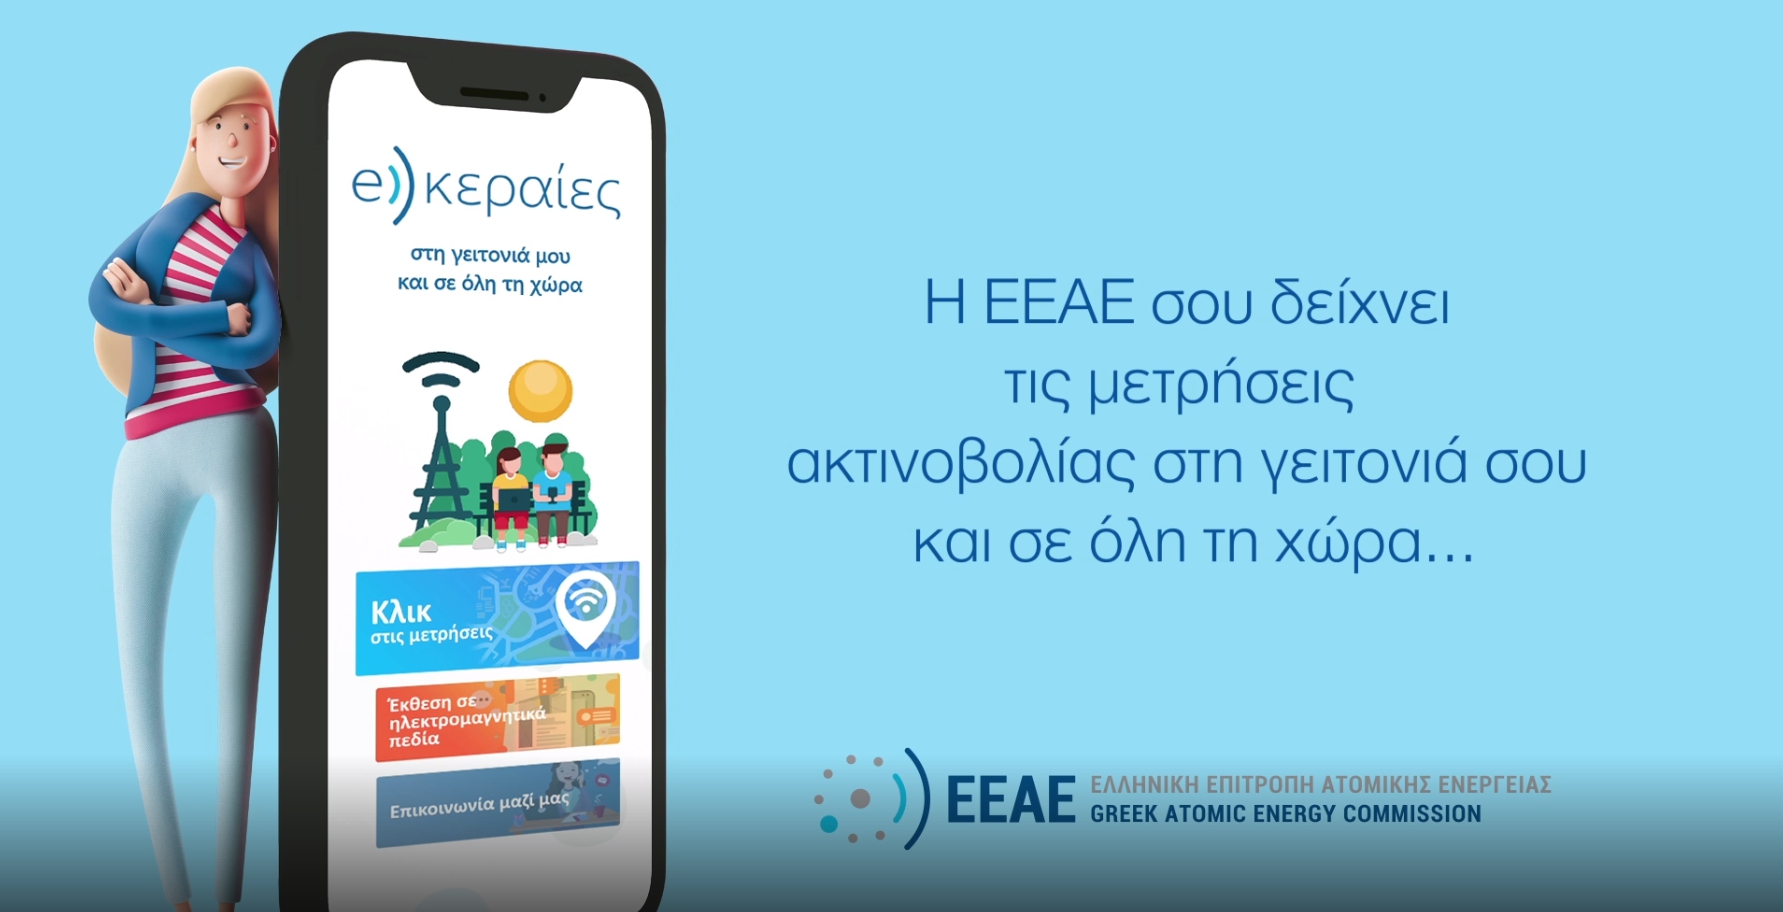 More information about "e-κεραίες: Online ενημέρωση για την ακτινοβολία εκπέμπουν οι κεραίες στην περιοχή σας"